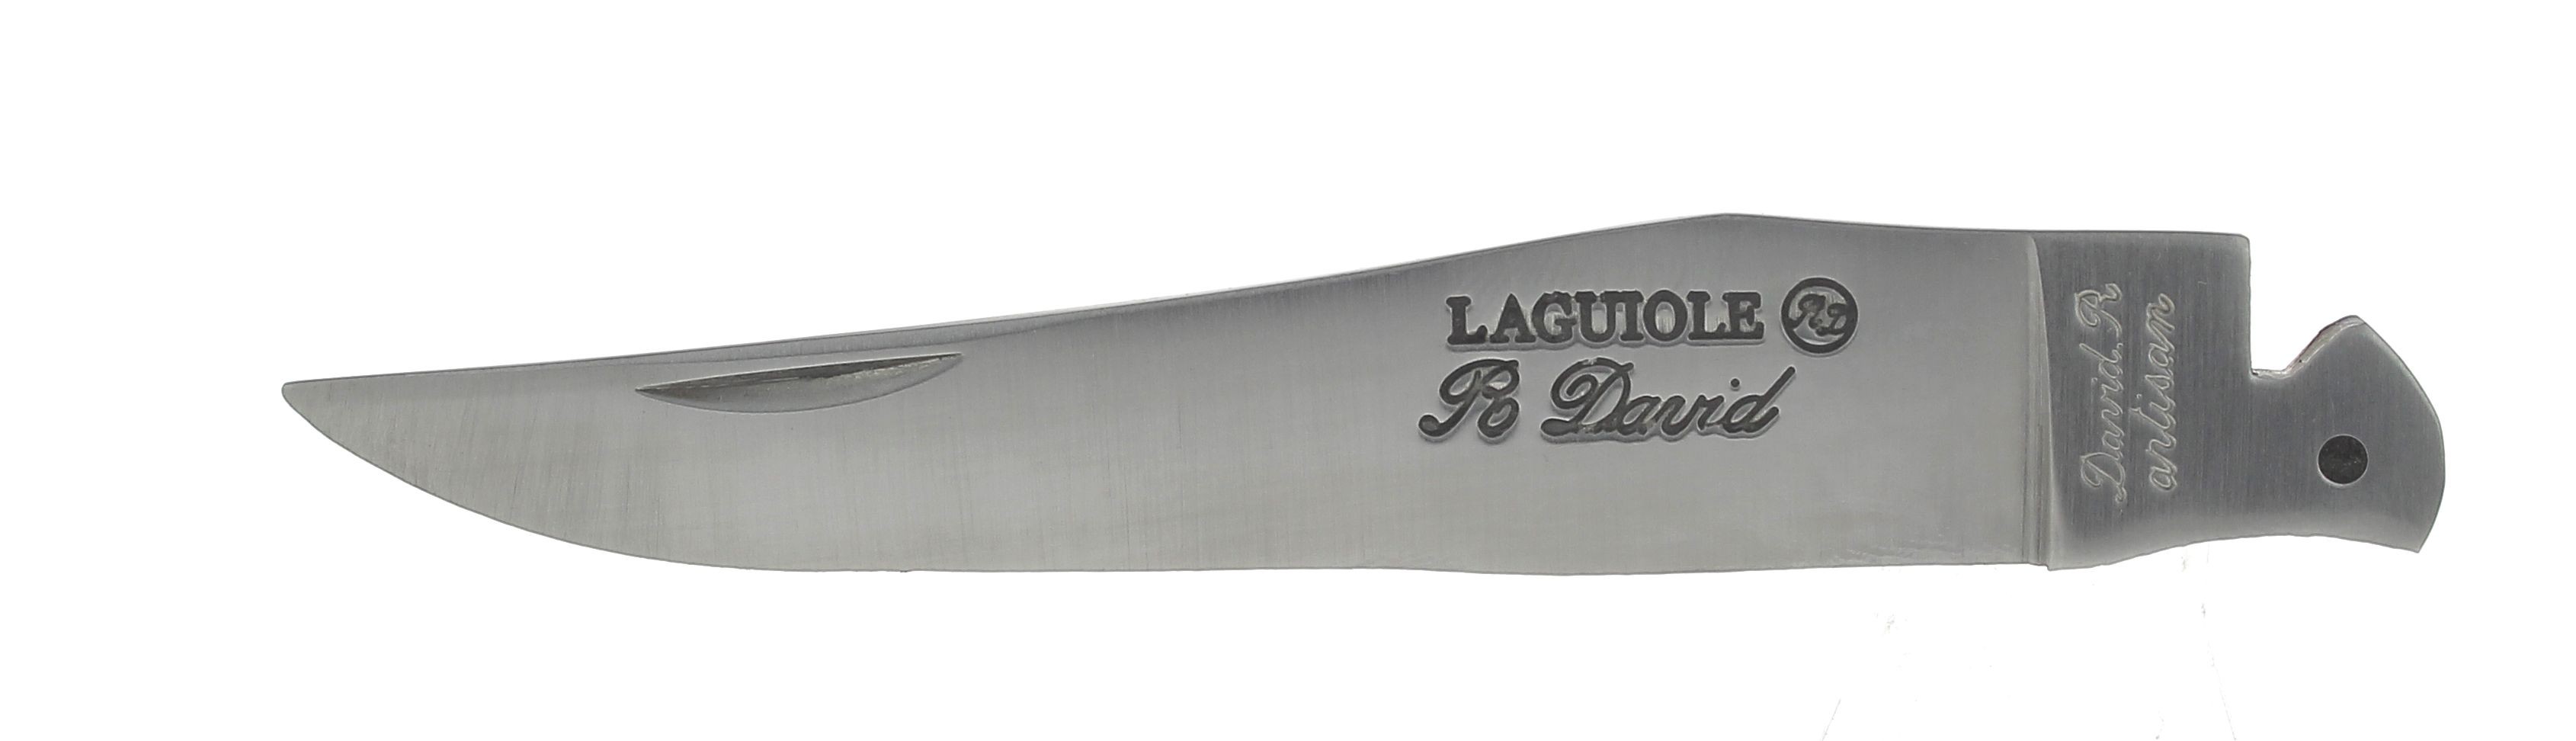 Laguiole carbon steel blade